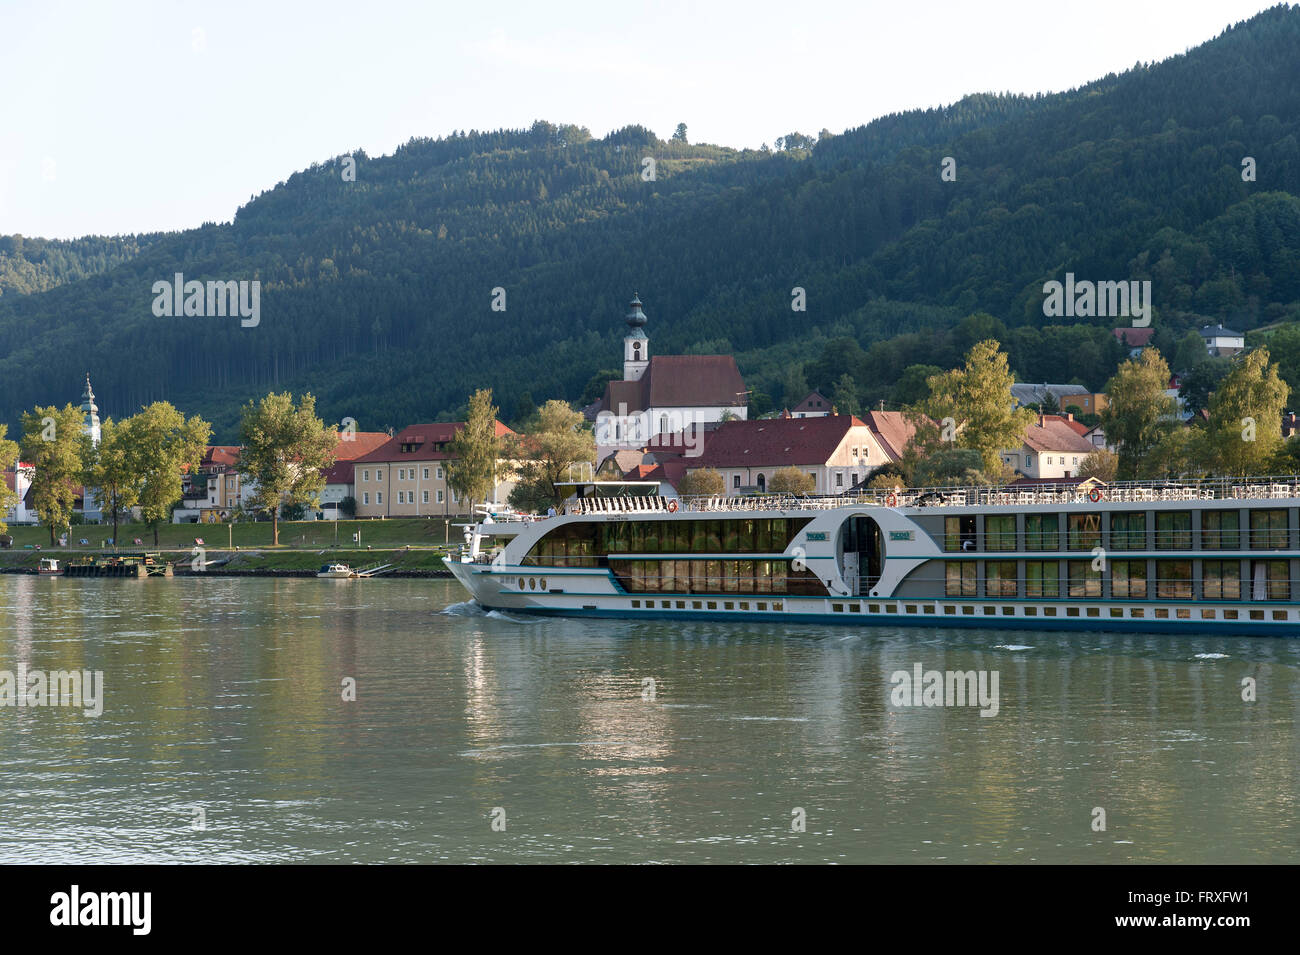 Cruise ship on the Danube, Engelhartszell, Austria Stock Photo